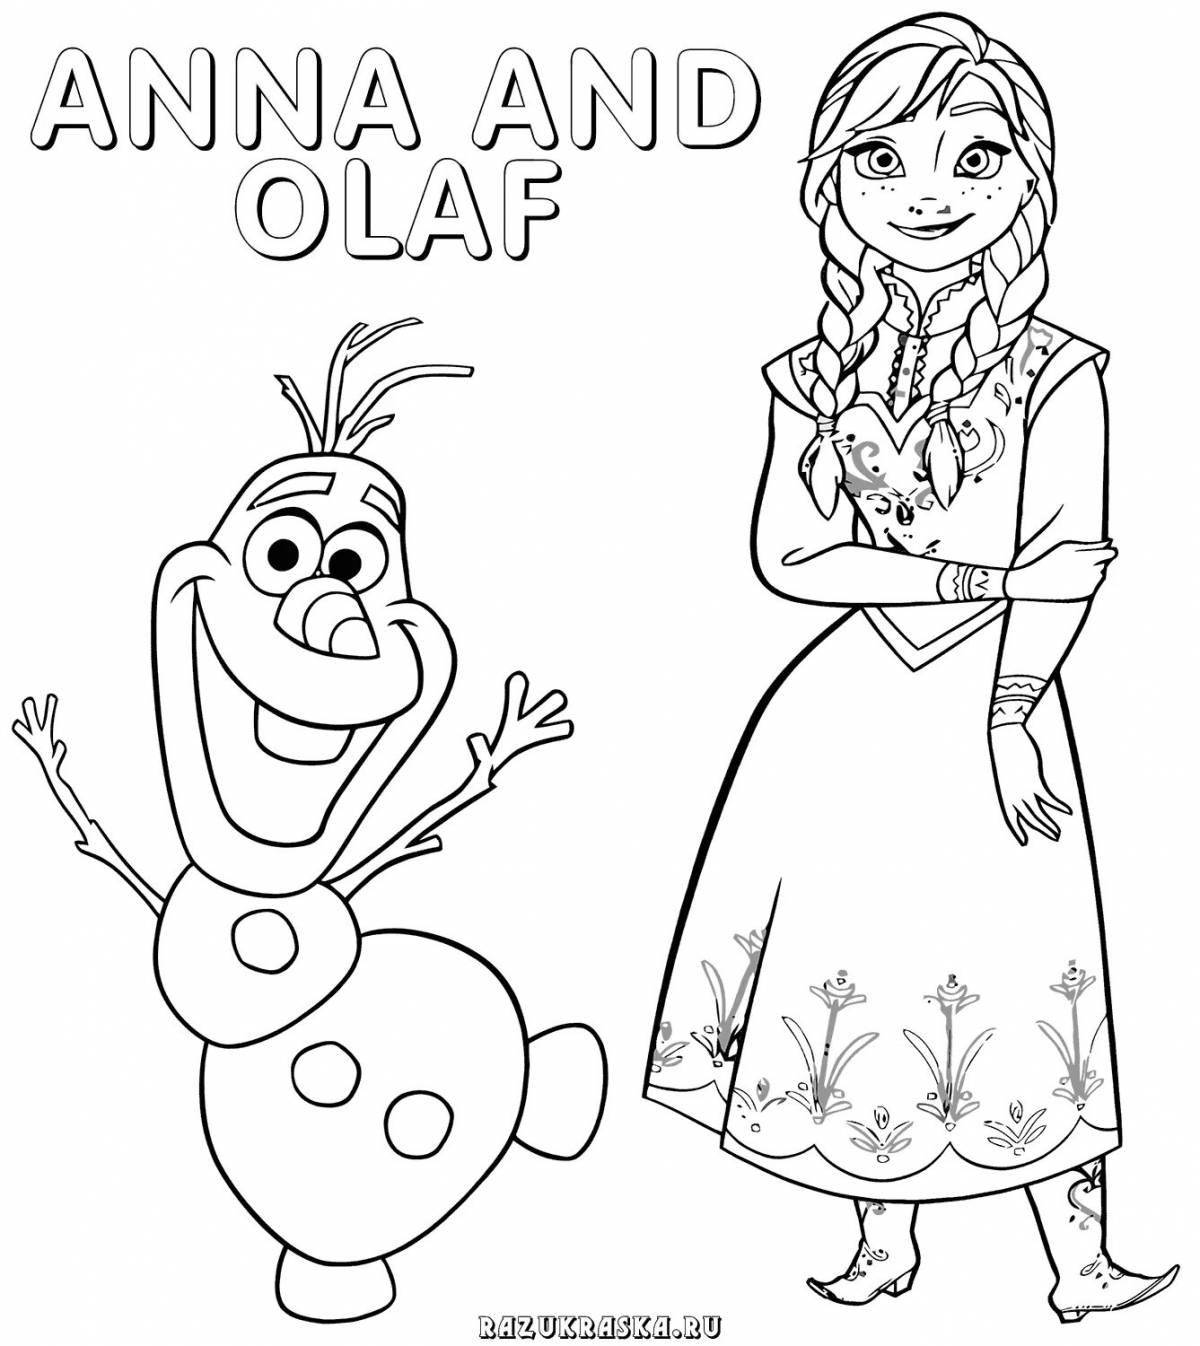 For children aged 5 6 elza and anna #1